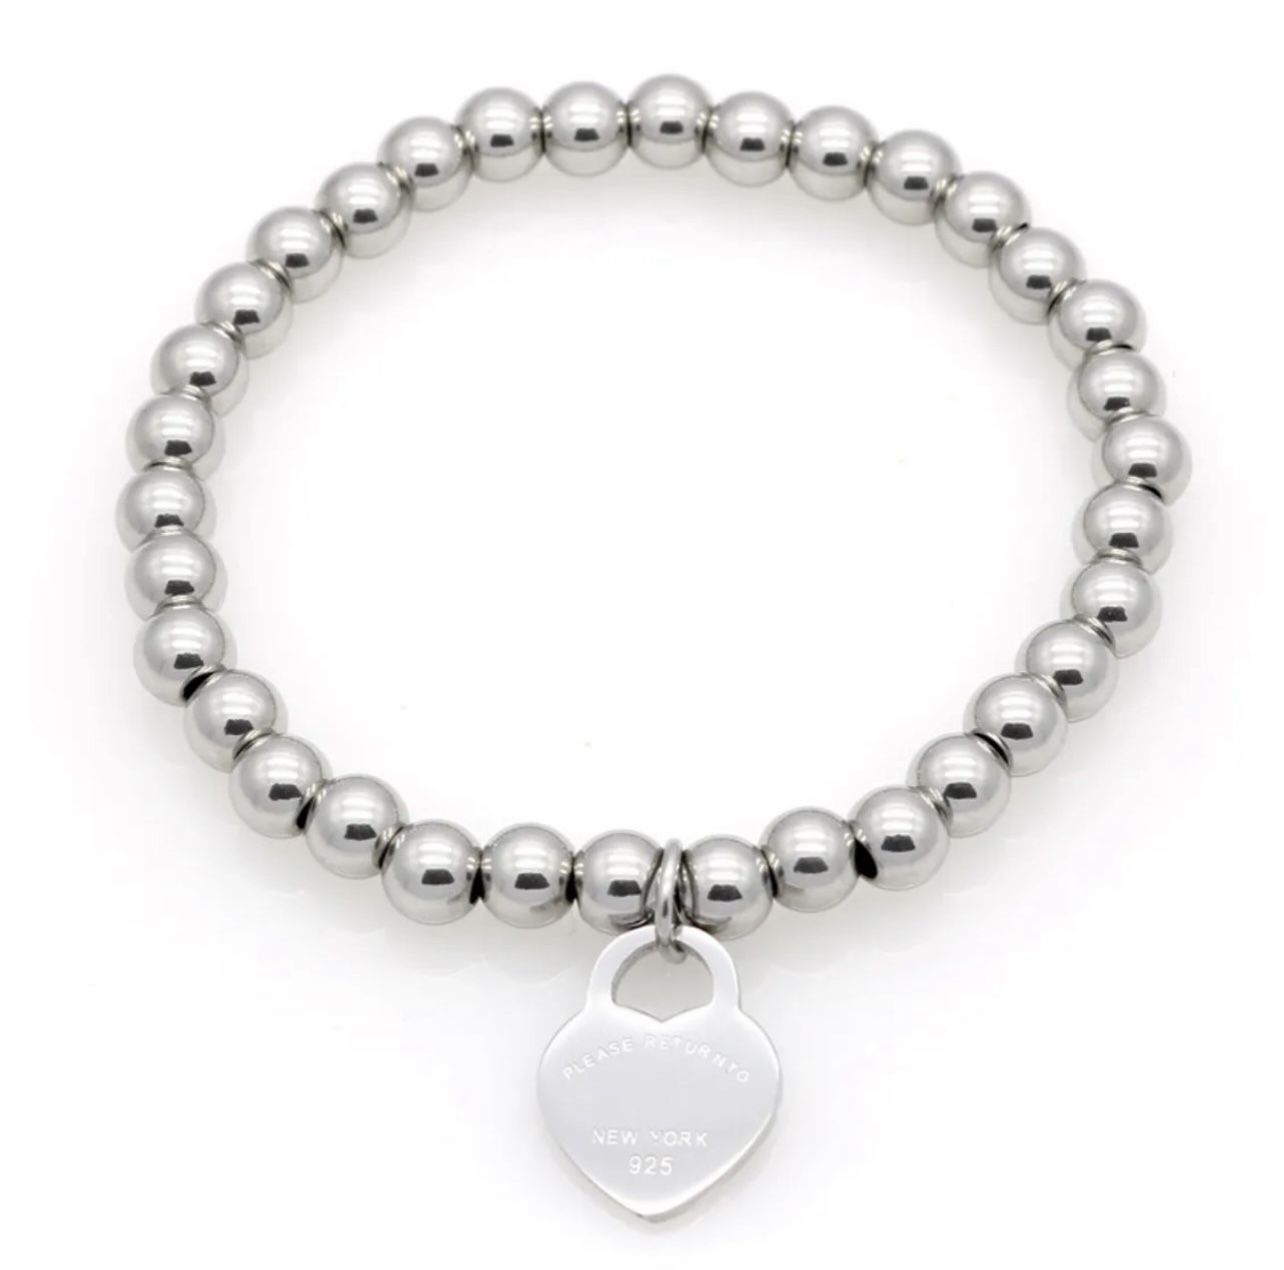 Bead Bracelet With Heart Charm